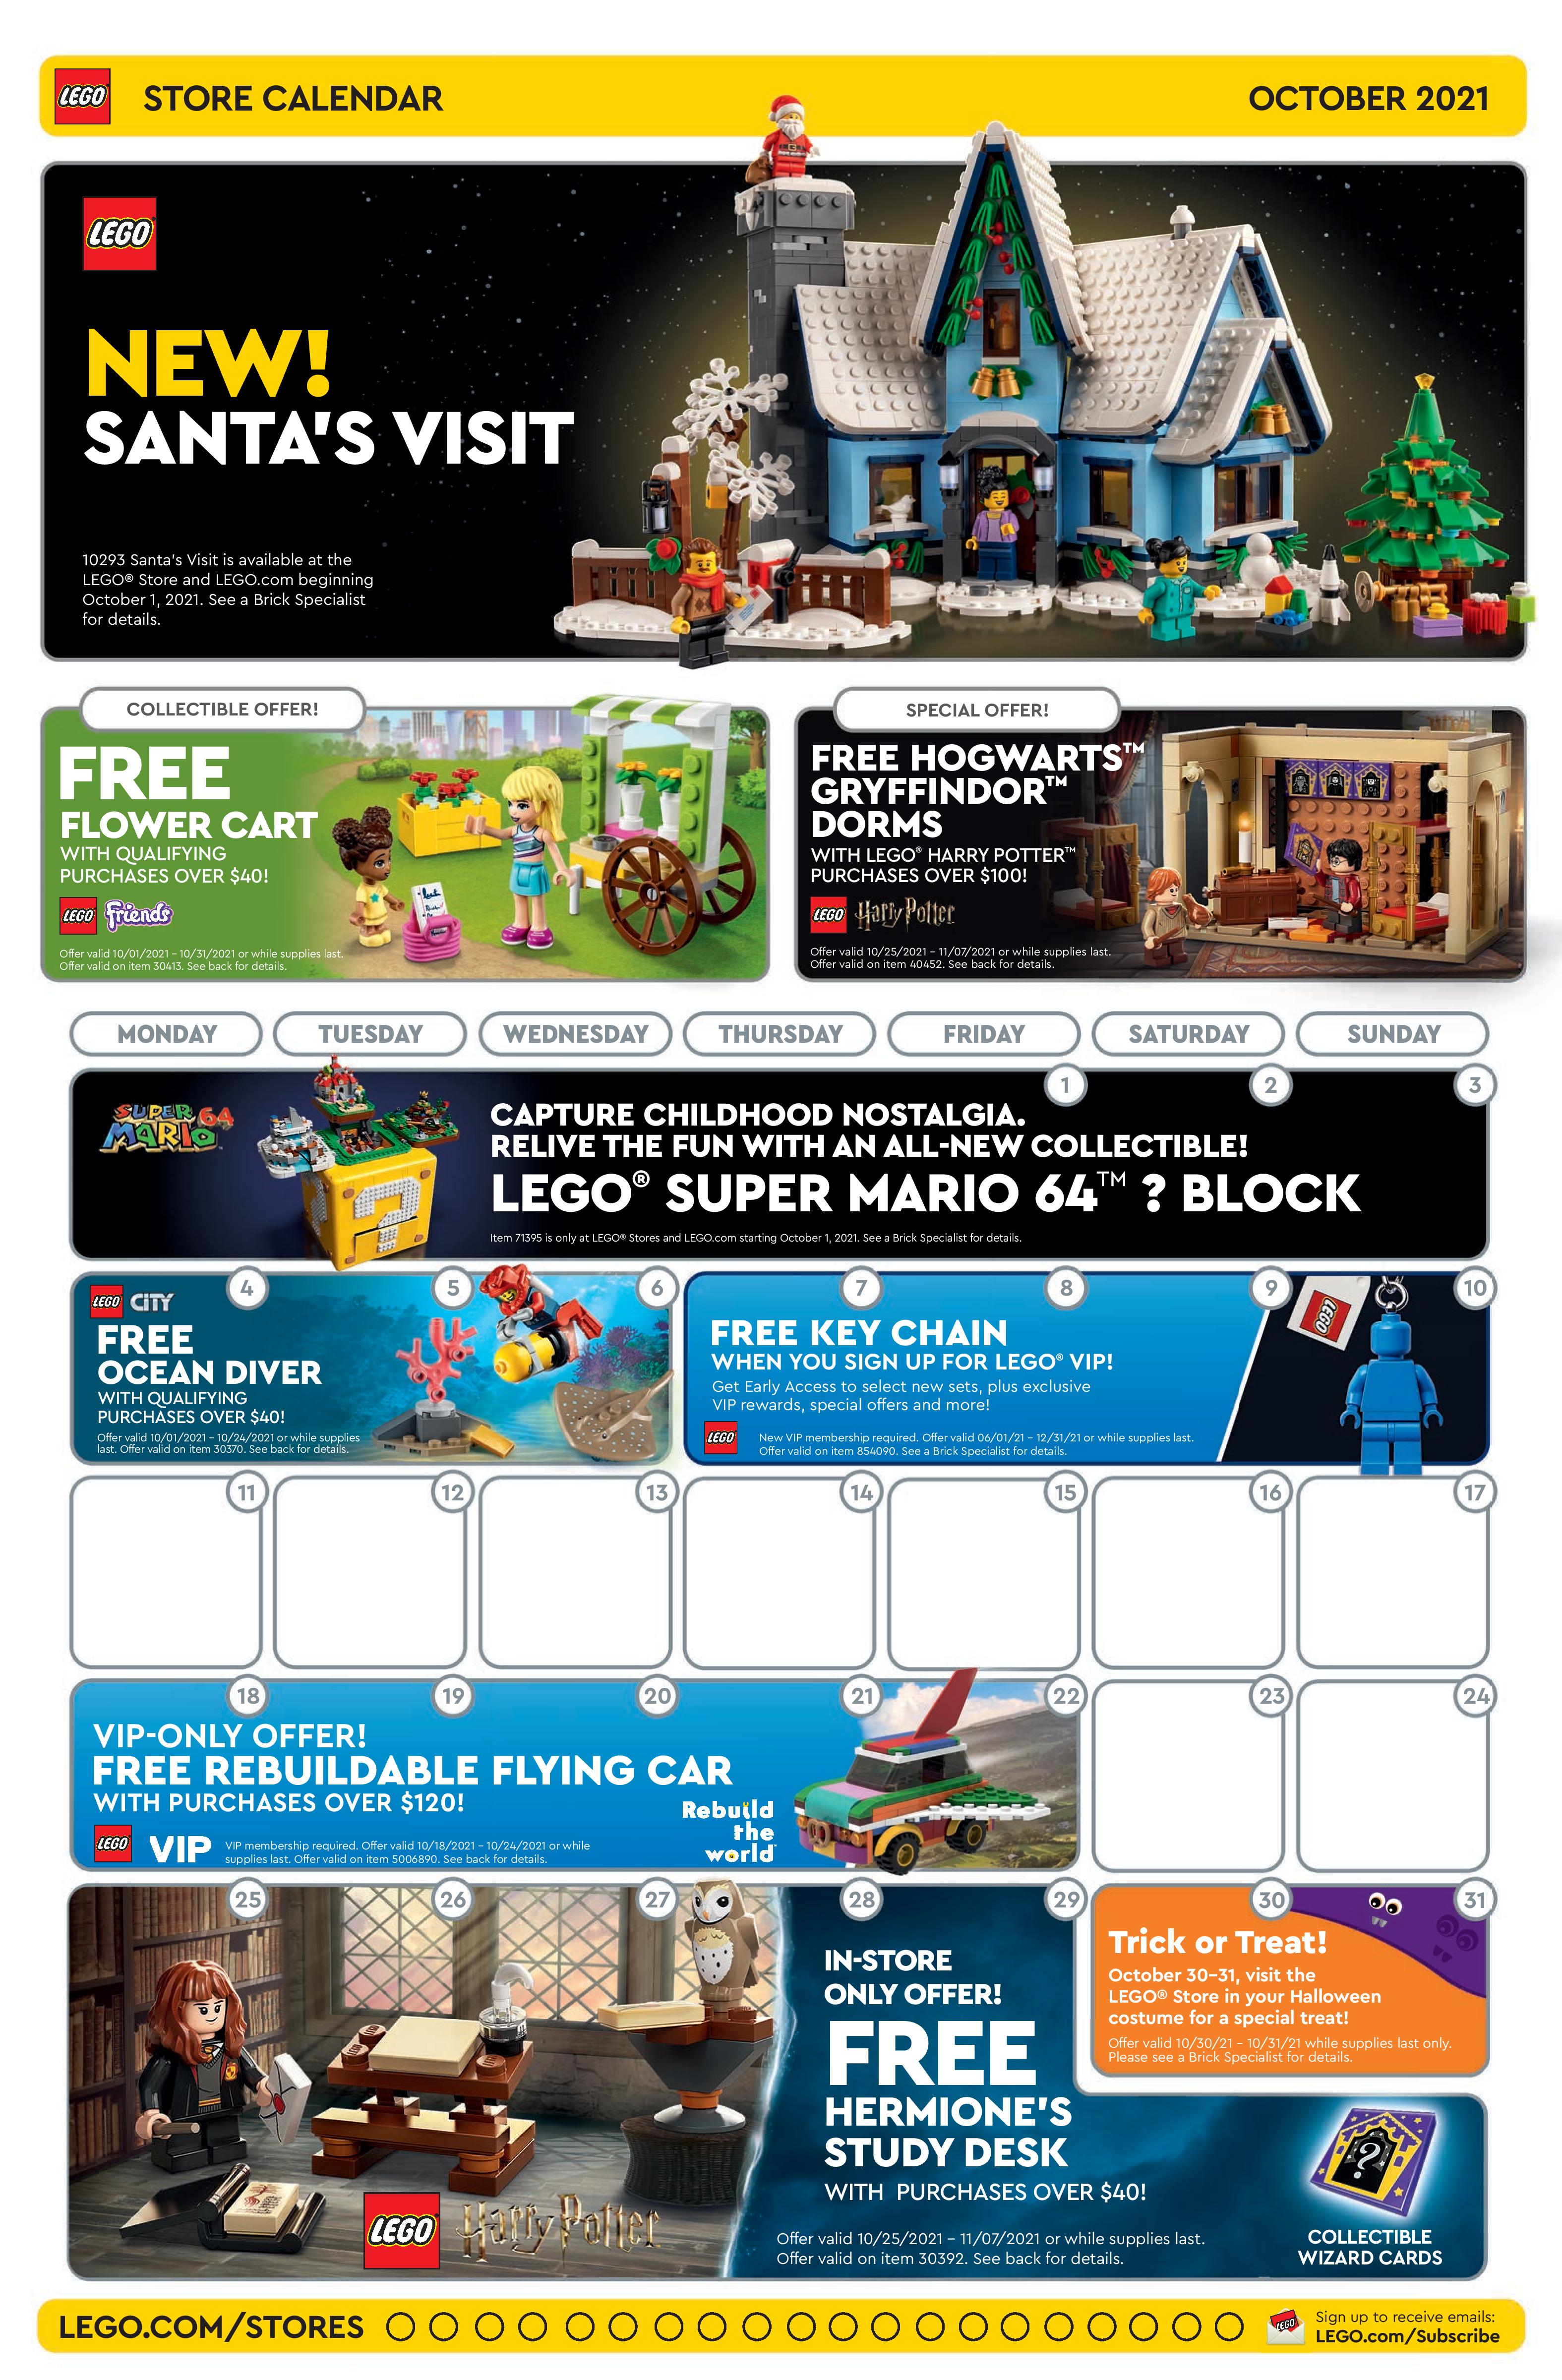 Lego Calendar October 2022 Lego October 2021 Store Calendar Promotions And Events - The Brick Fan